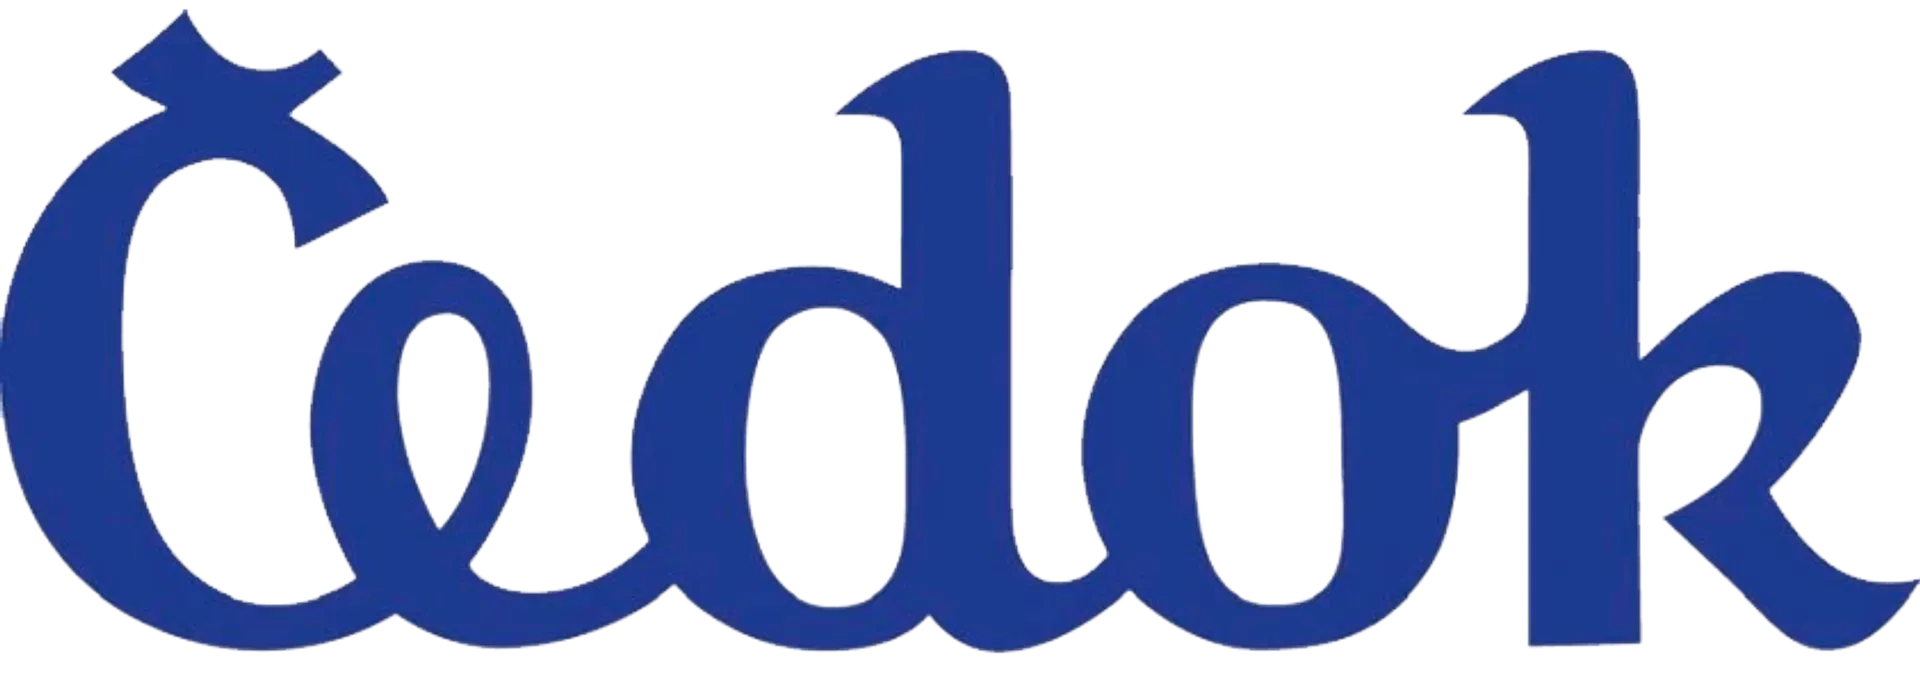 ČEDOK logo